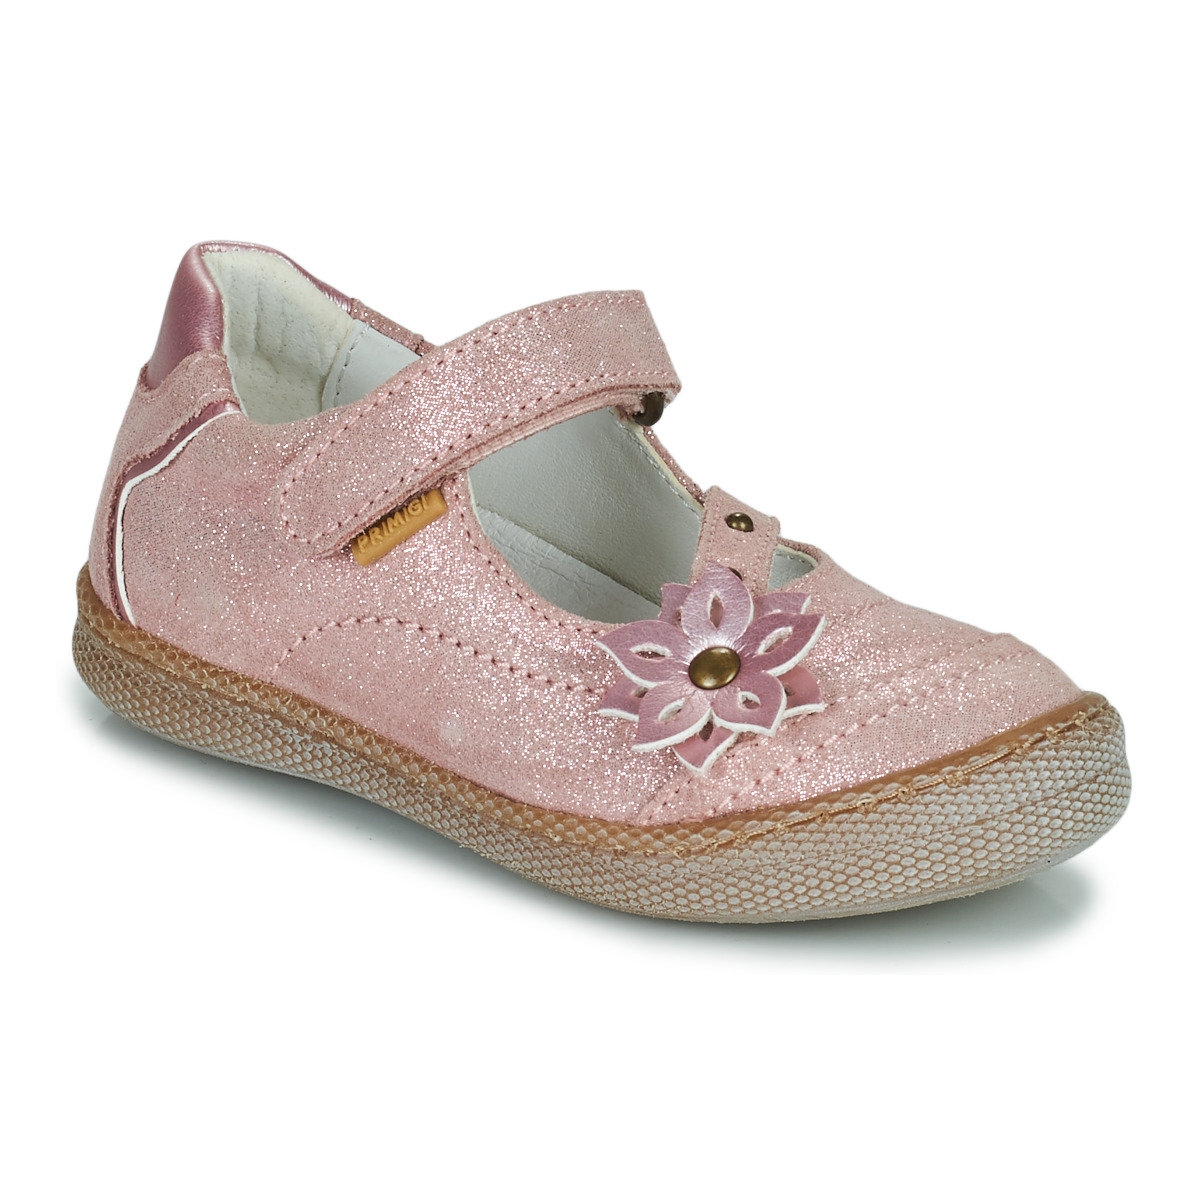 Chaussures Fille Ballerines / babies Primigi 1917200 Rose